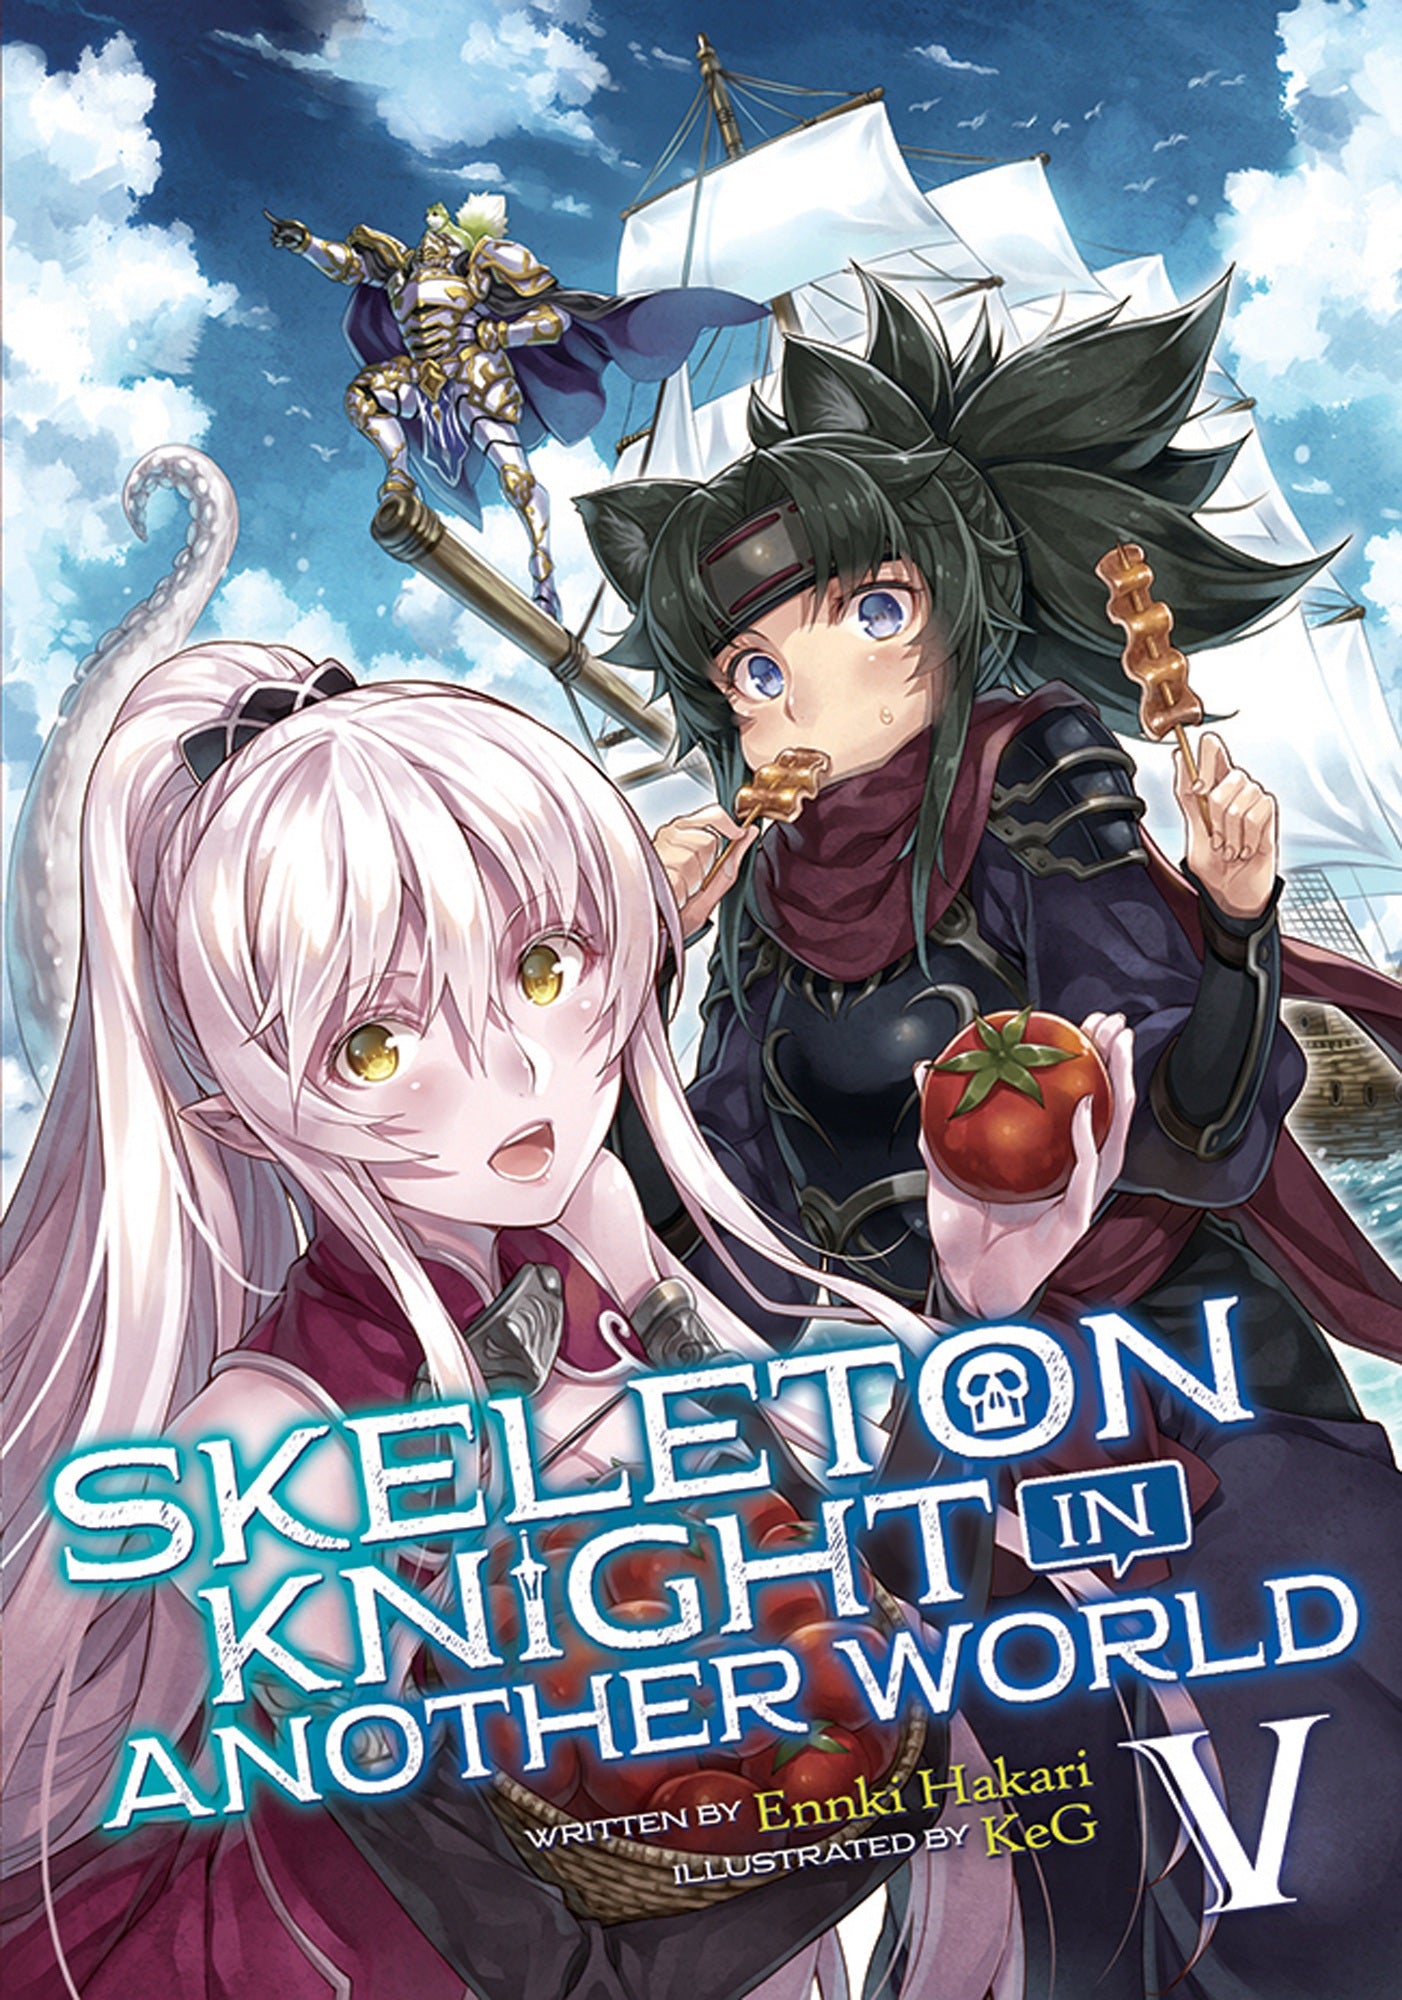 Skeleton Knight in Another World (Light Novel) Vol. 05